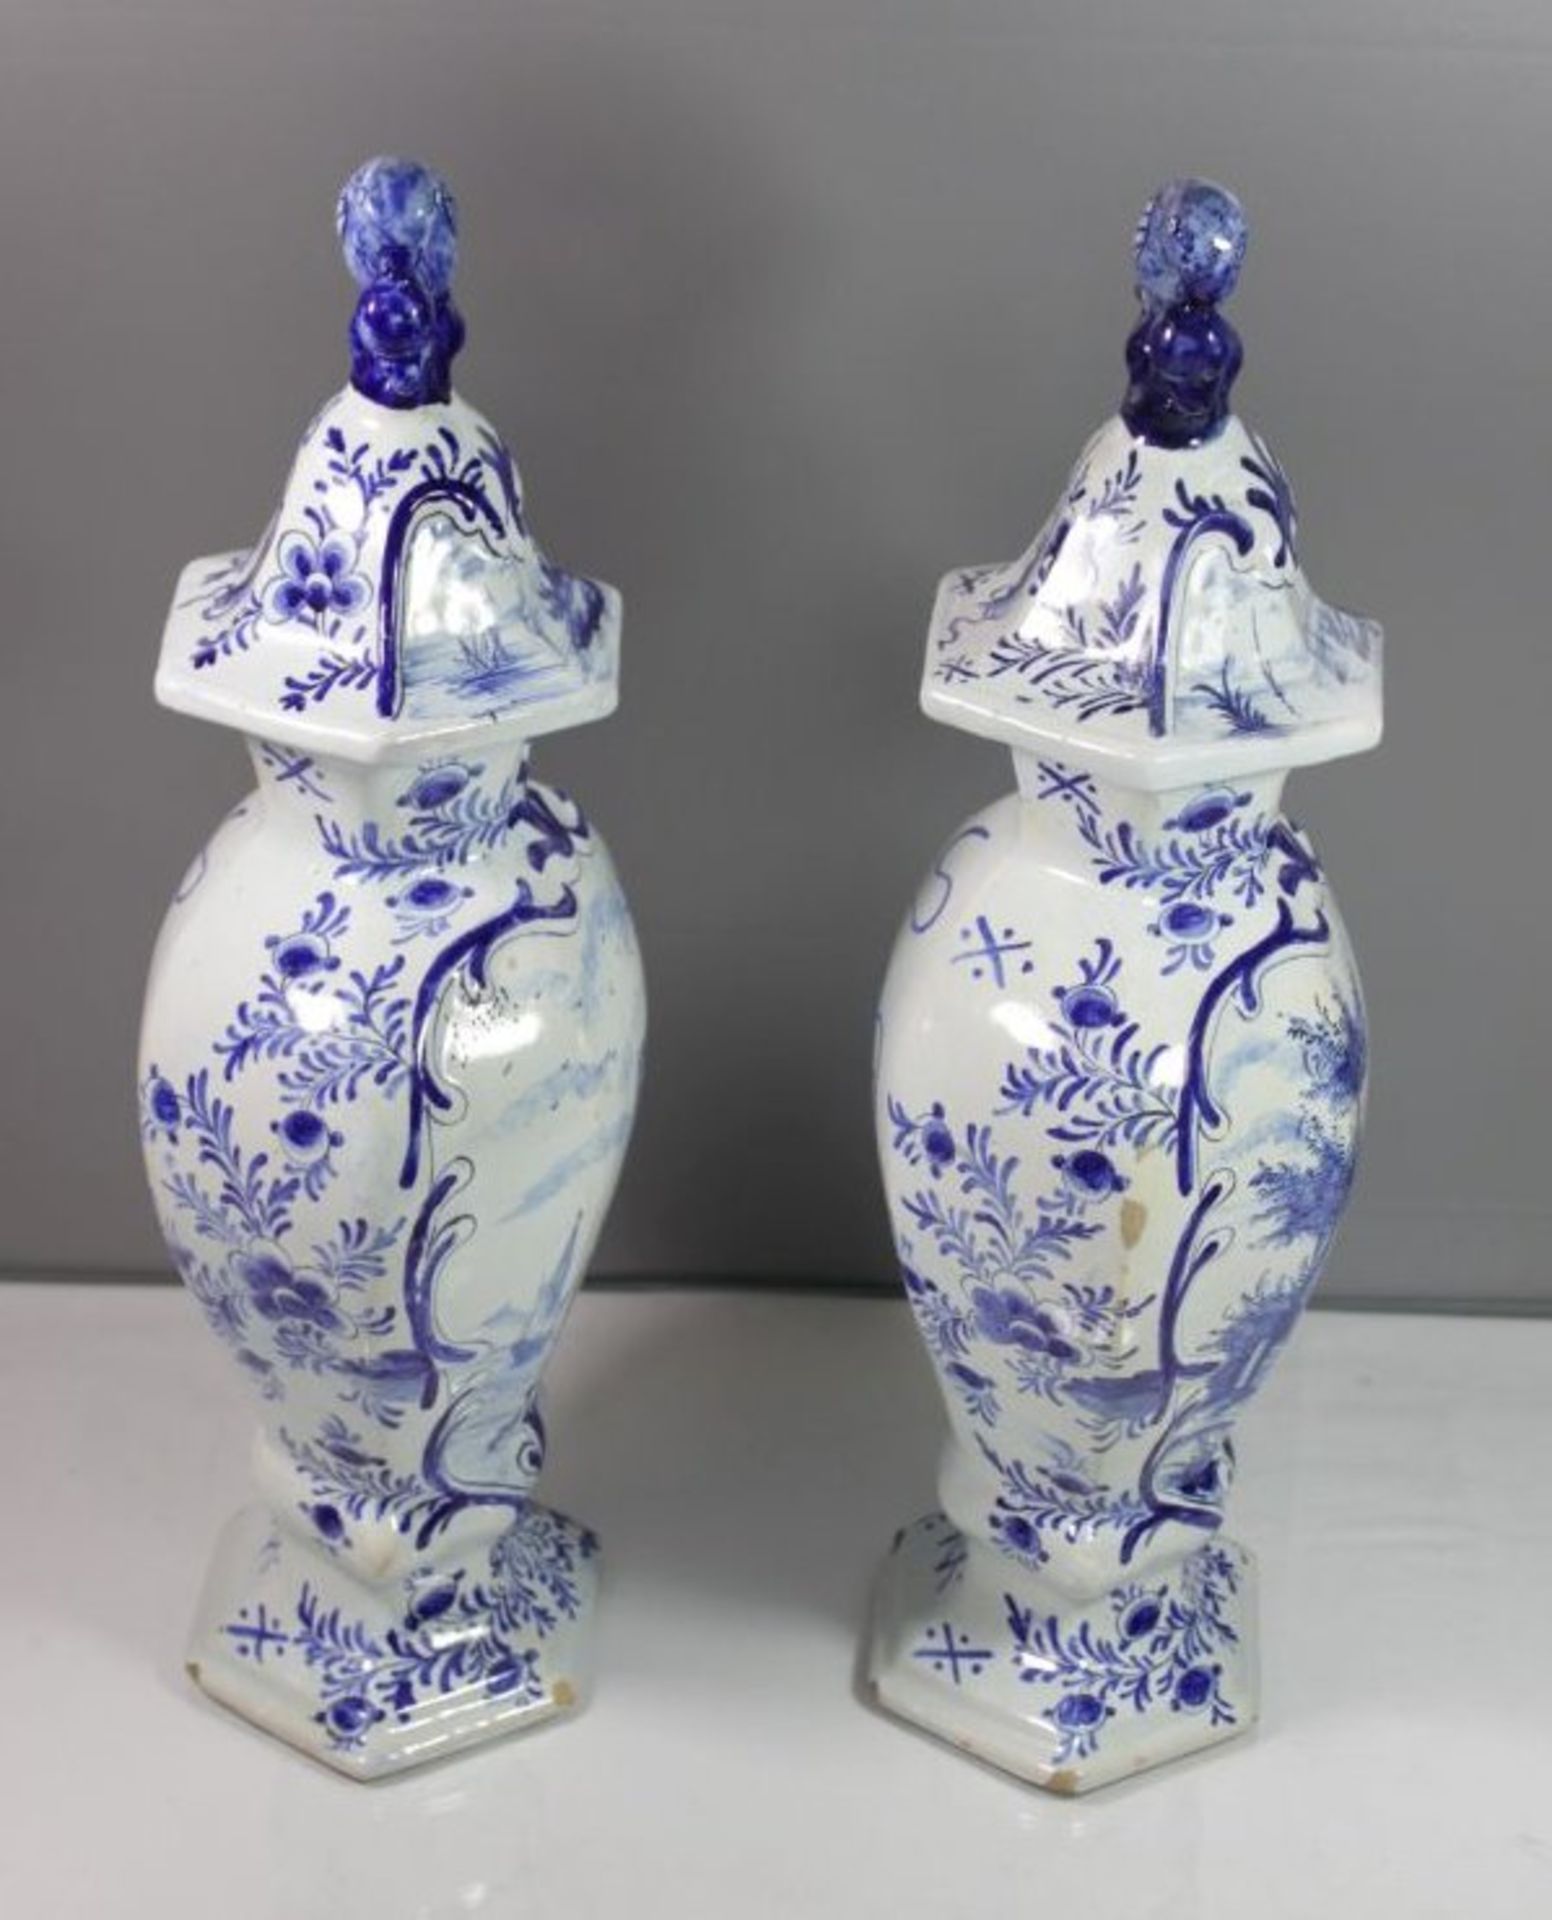 Vasen-Paar, 18. Jhd. Delft, de Porceleyne Fles, gemarkt, Blaumalerei, Landschafts- u. - Bild 2 aus 3